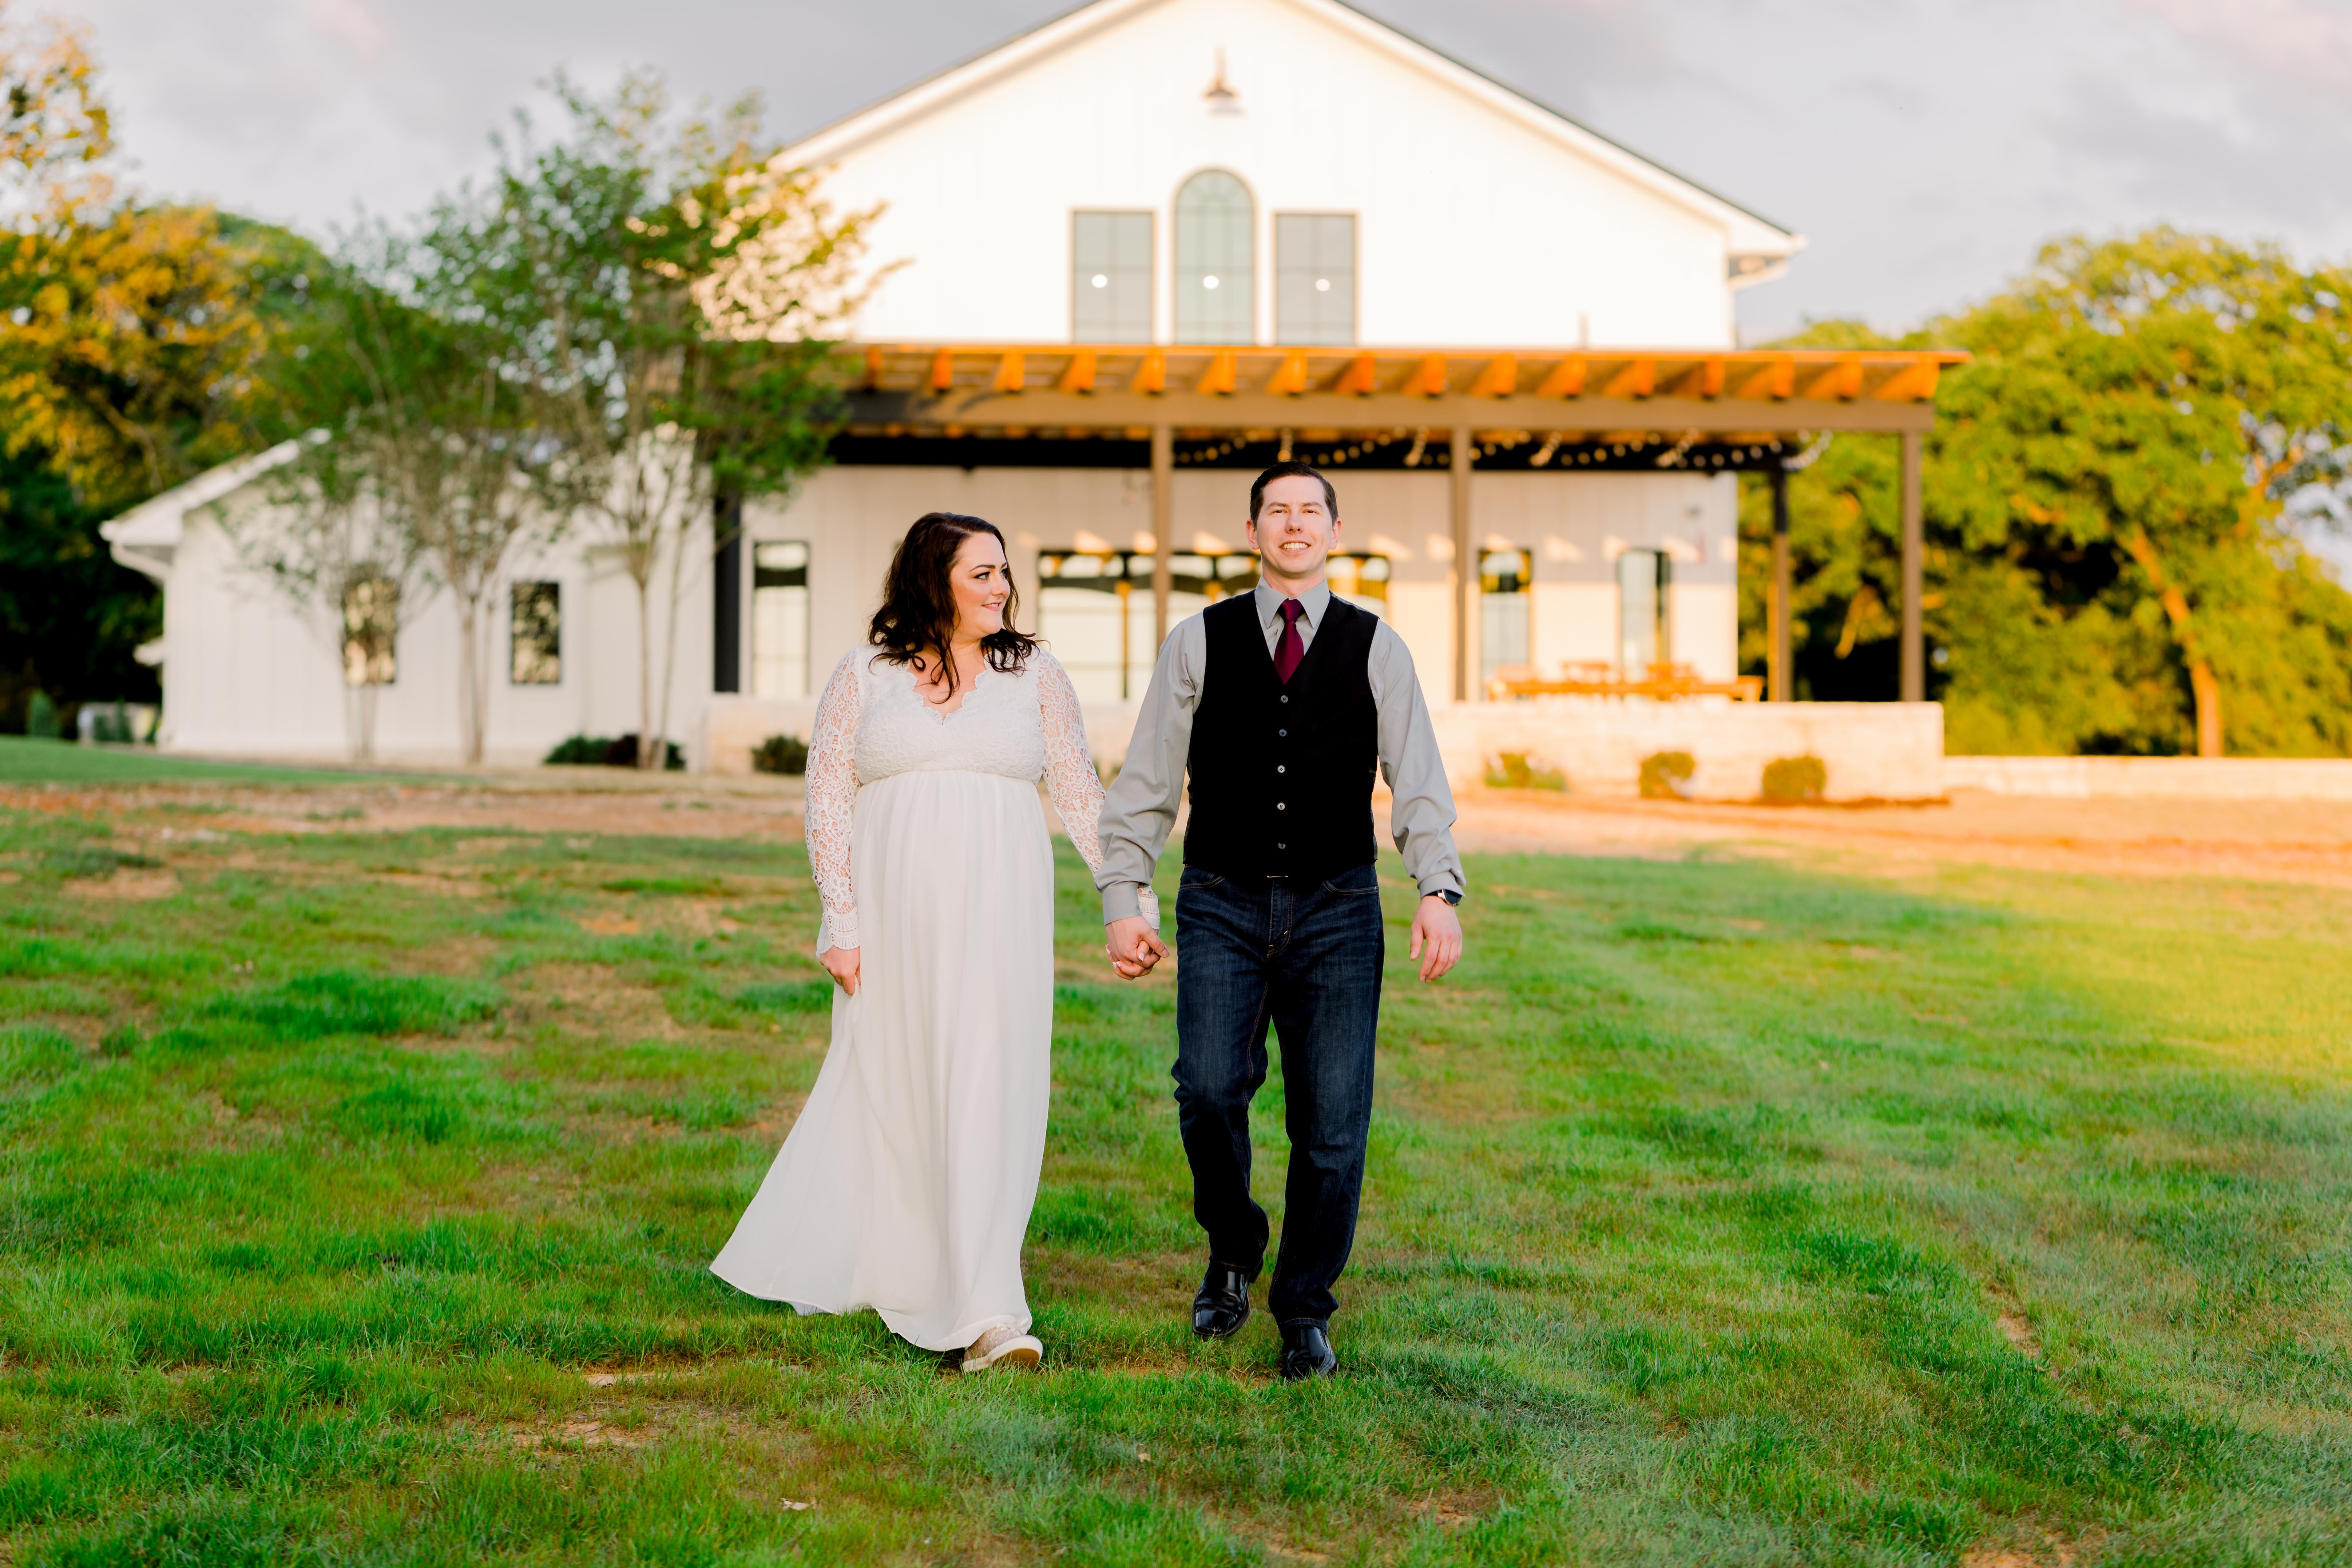 The Wedding Website of Ashleigh Lauren Watson and Nicholas Eugene Ponton